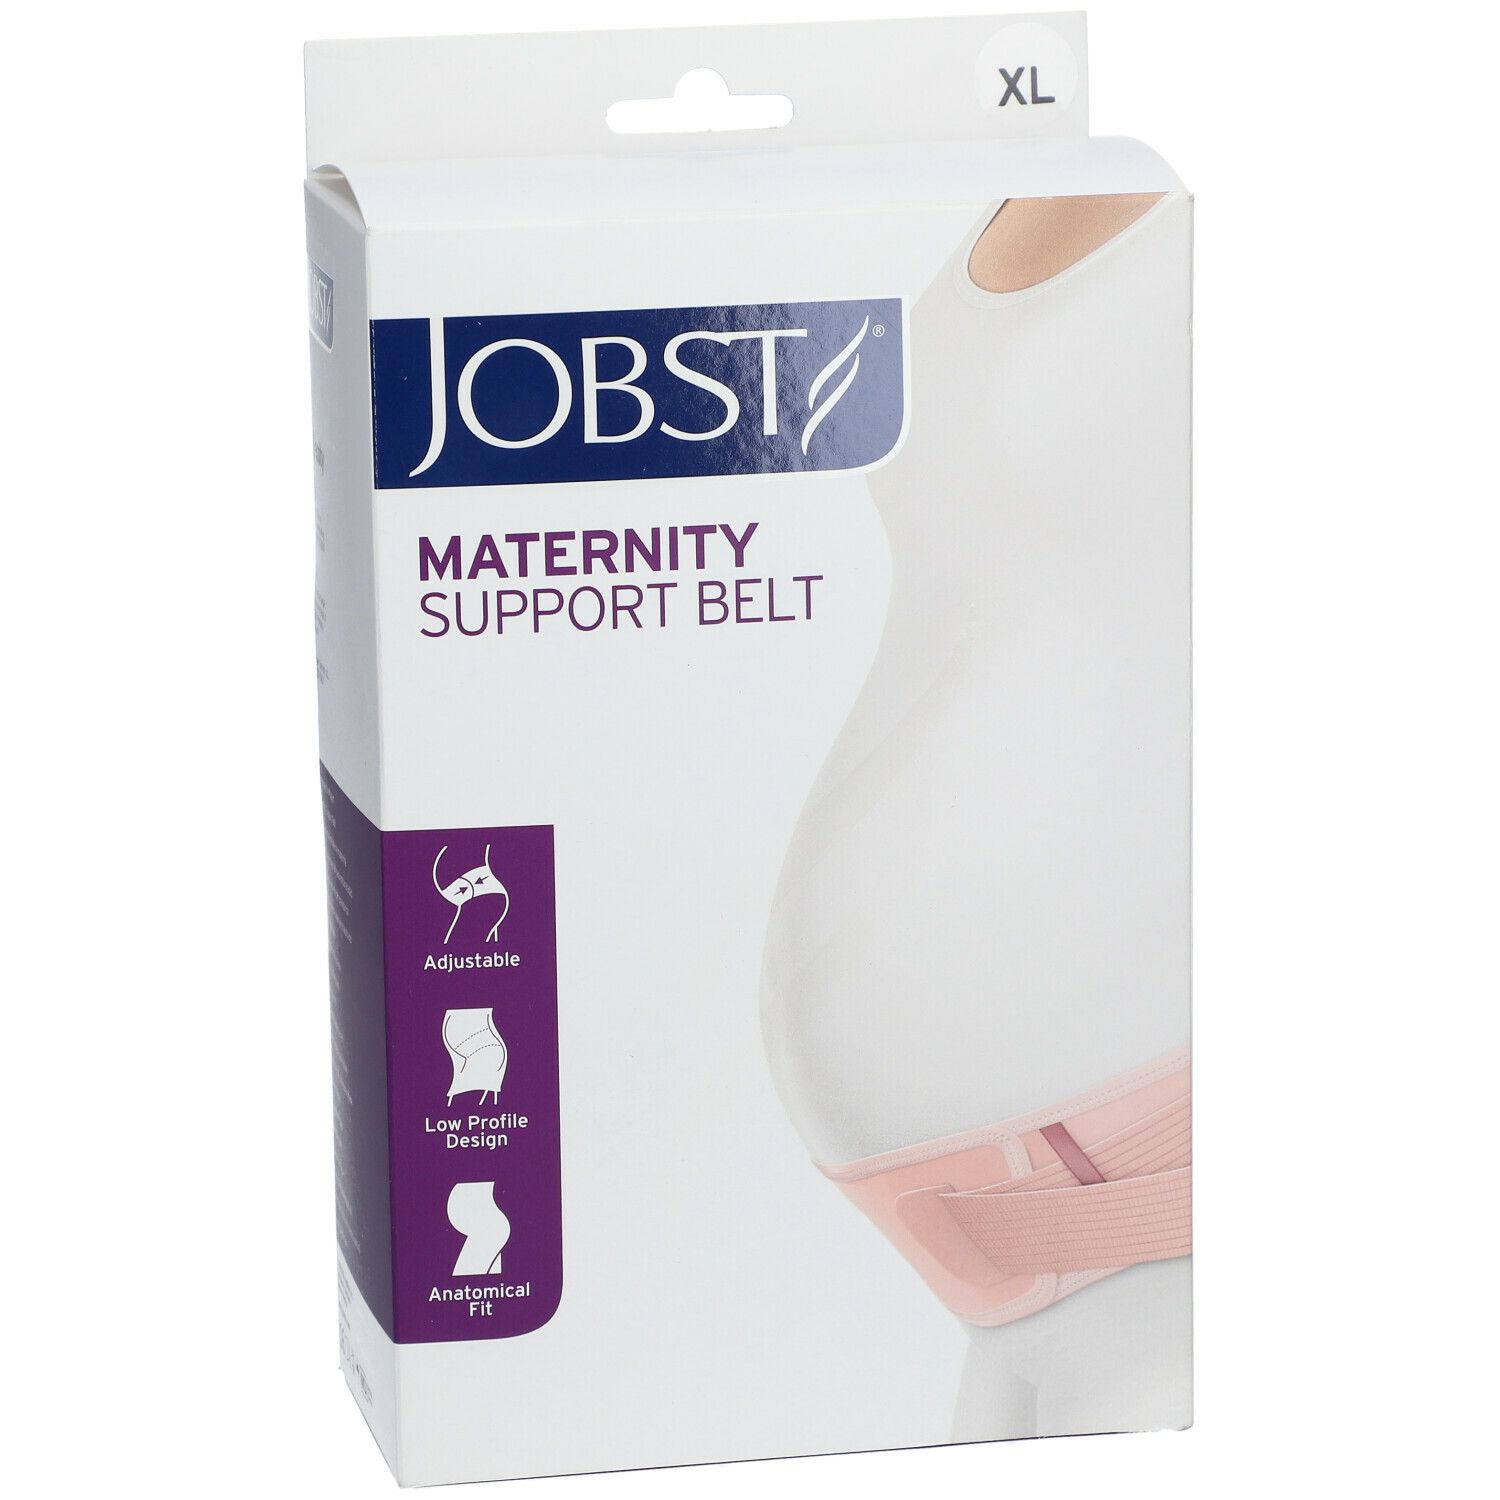 Jobst Maternity Support Belt Rückenbandage für Schwangere, stützt u. entlastet den Rückenbereich